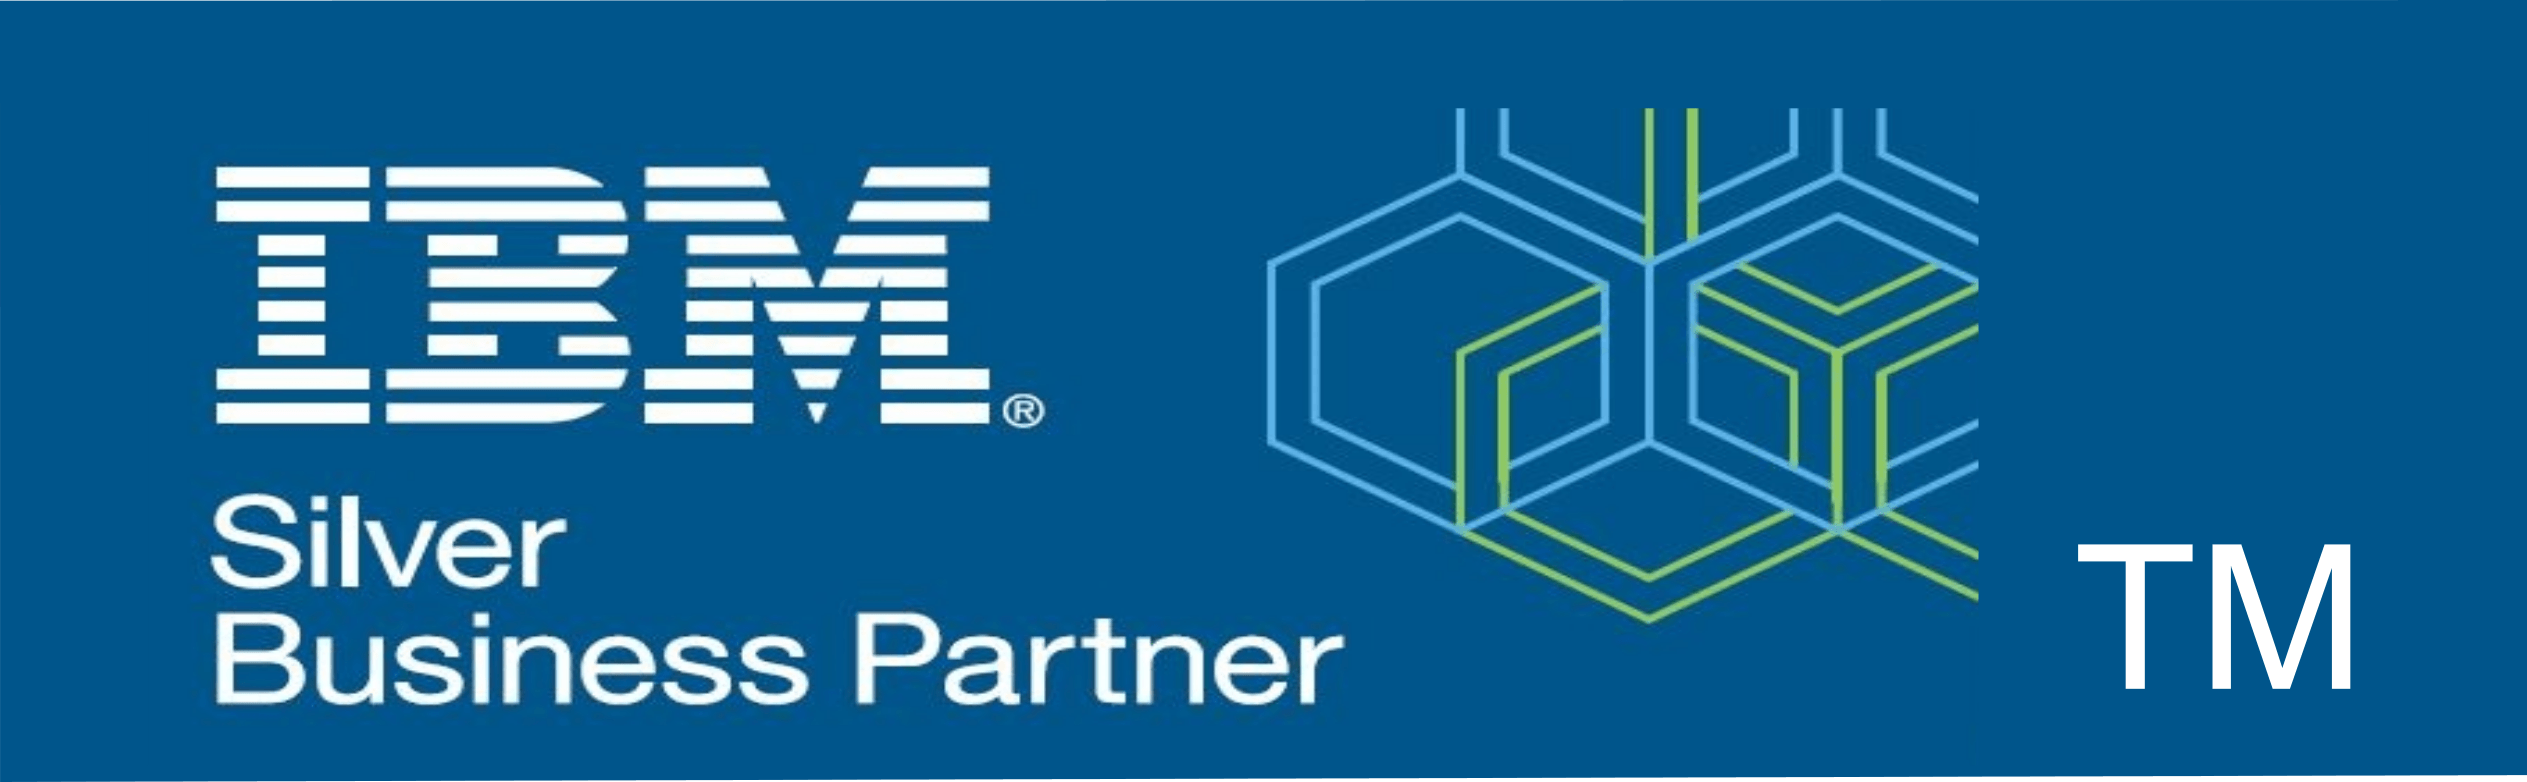 IBM Partner Logo - Algorisys - IT Company